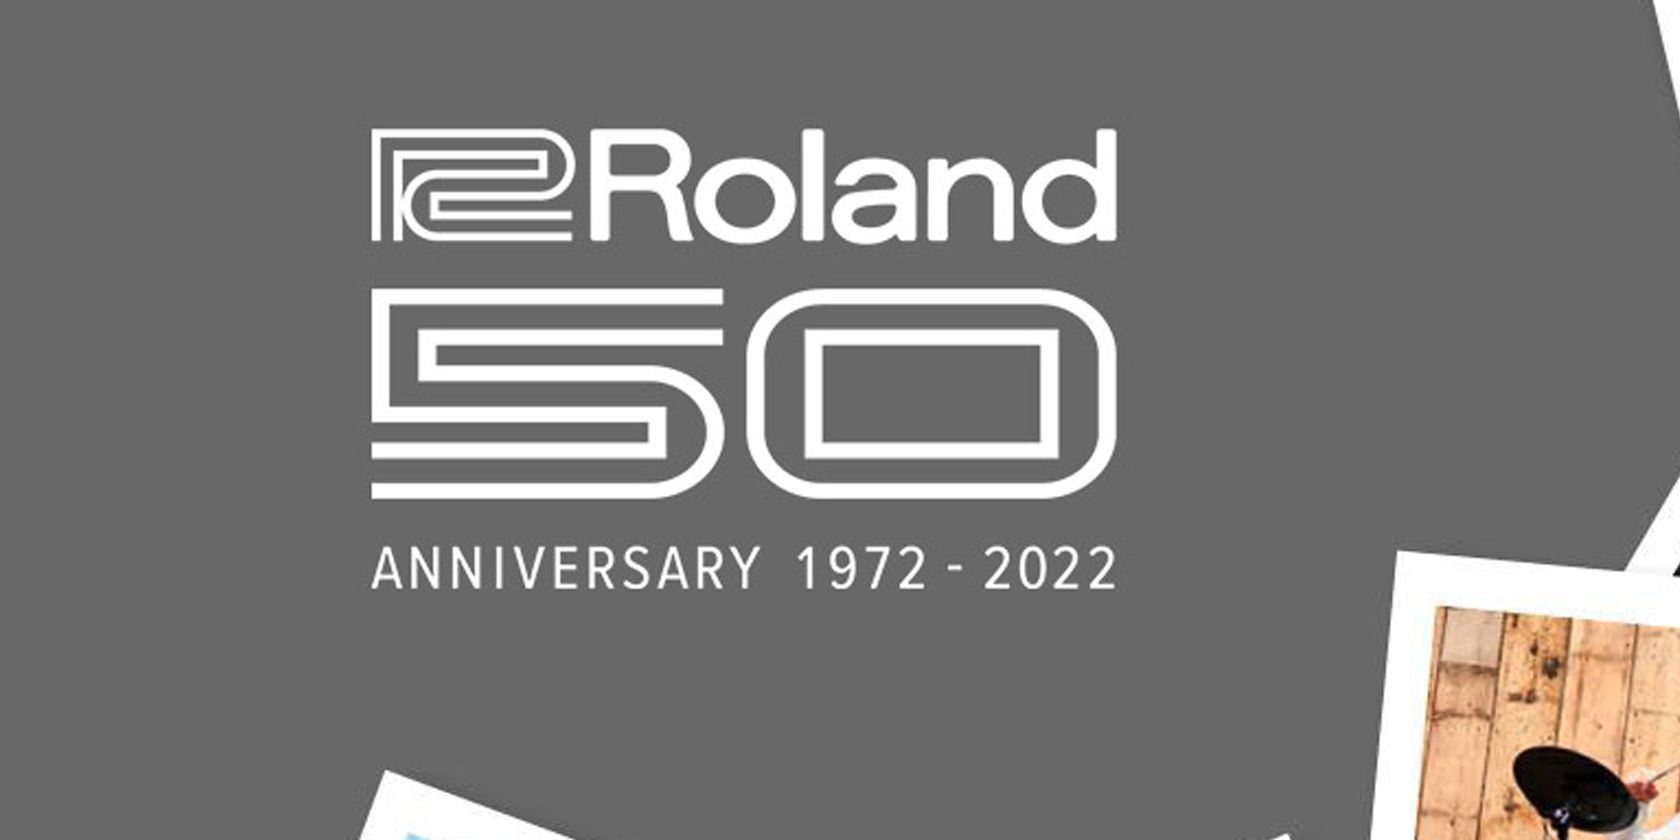 Roland's 50th Anniversary